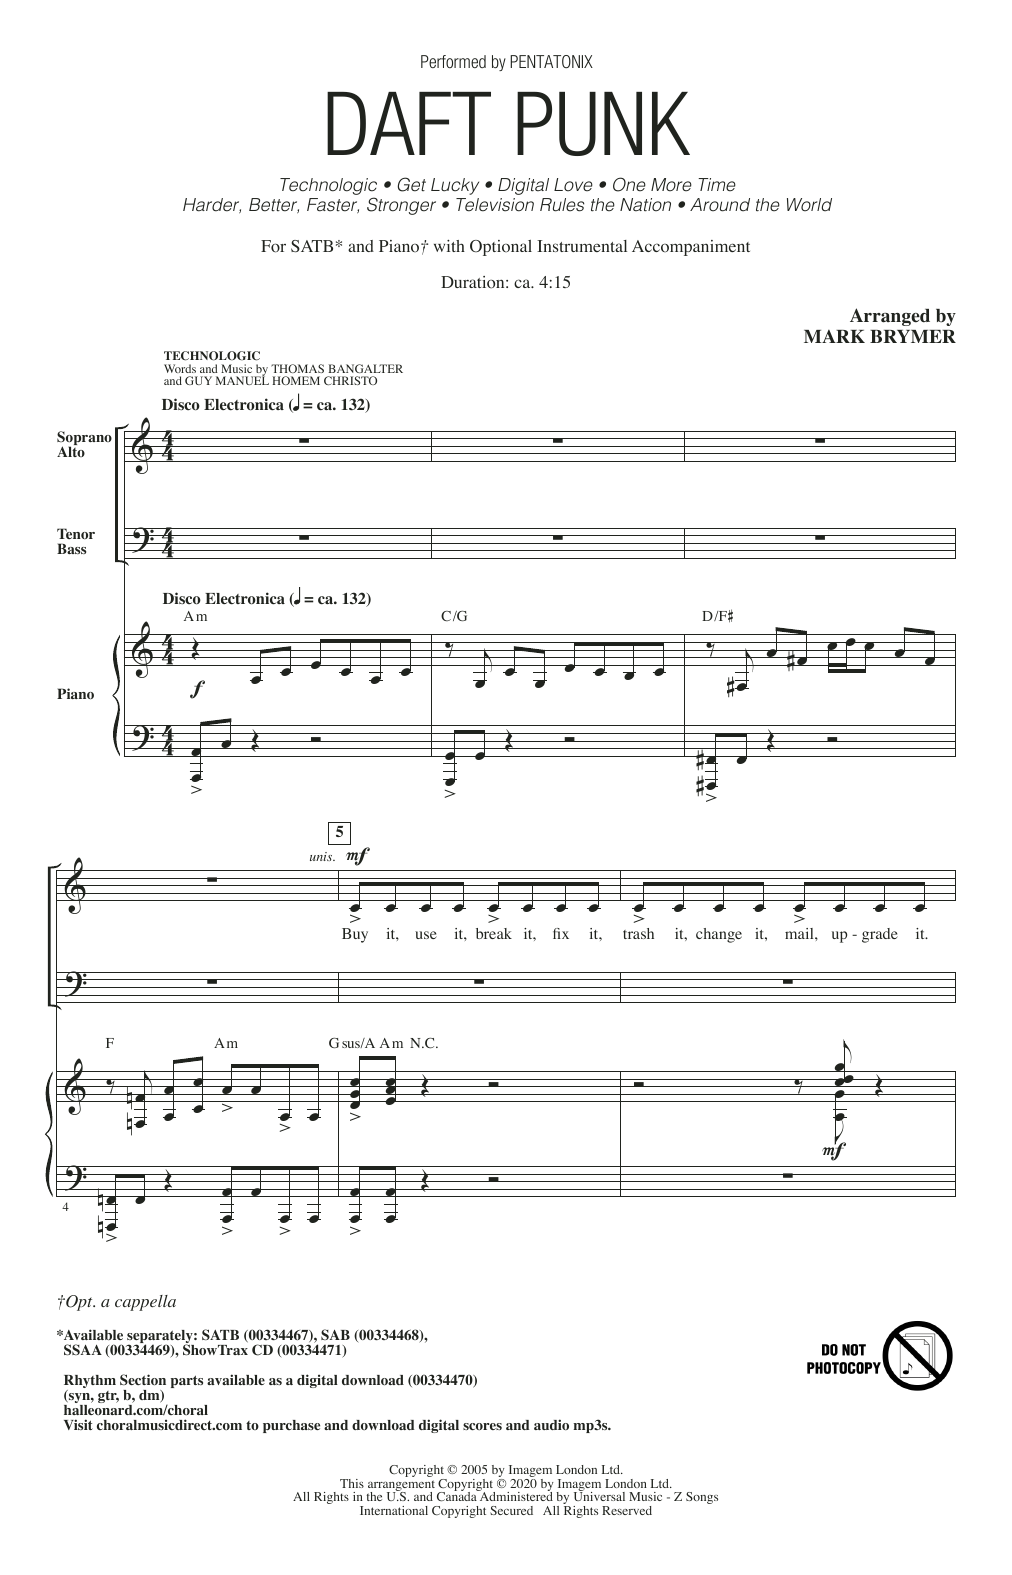 Pentatonix Daft Punk (Choral Medley) (arr. Mark Brymer) Sheet Music Notes & Chords for SAB Choir - Download or Print PDF